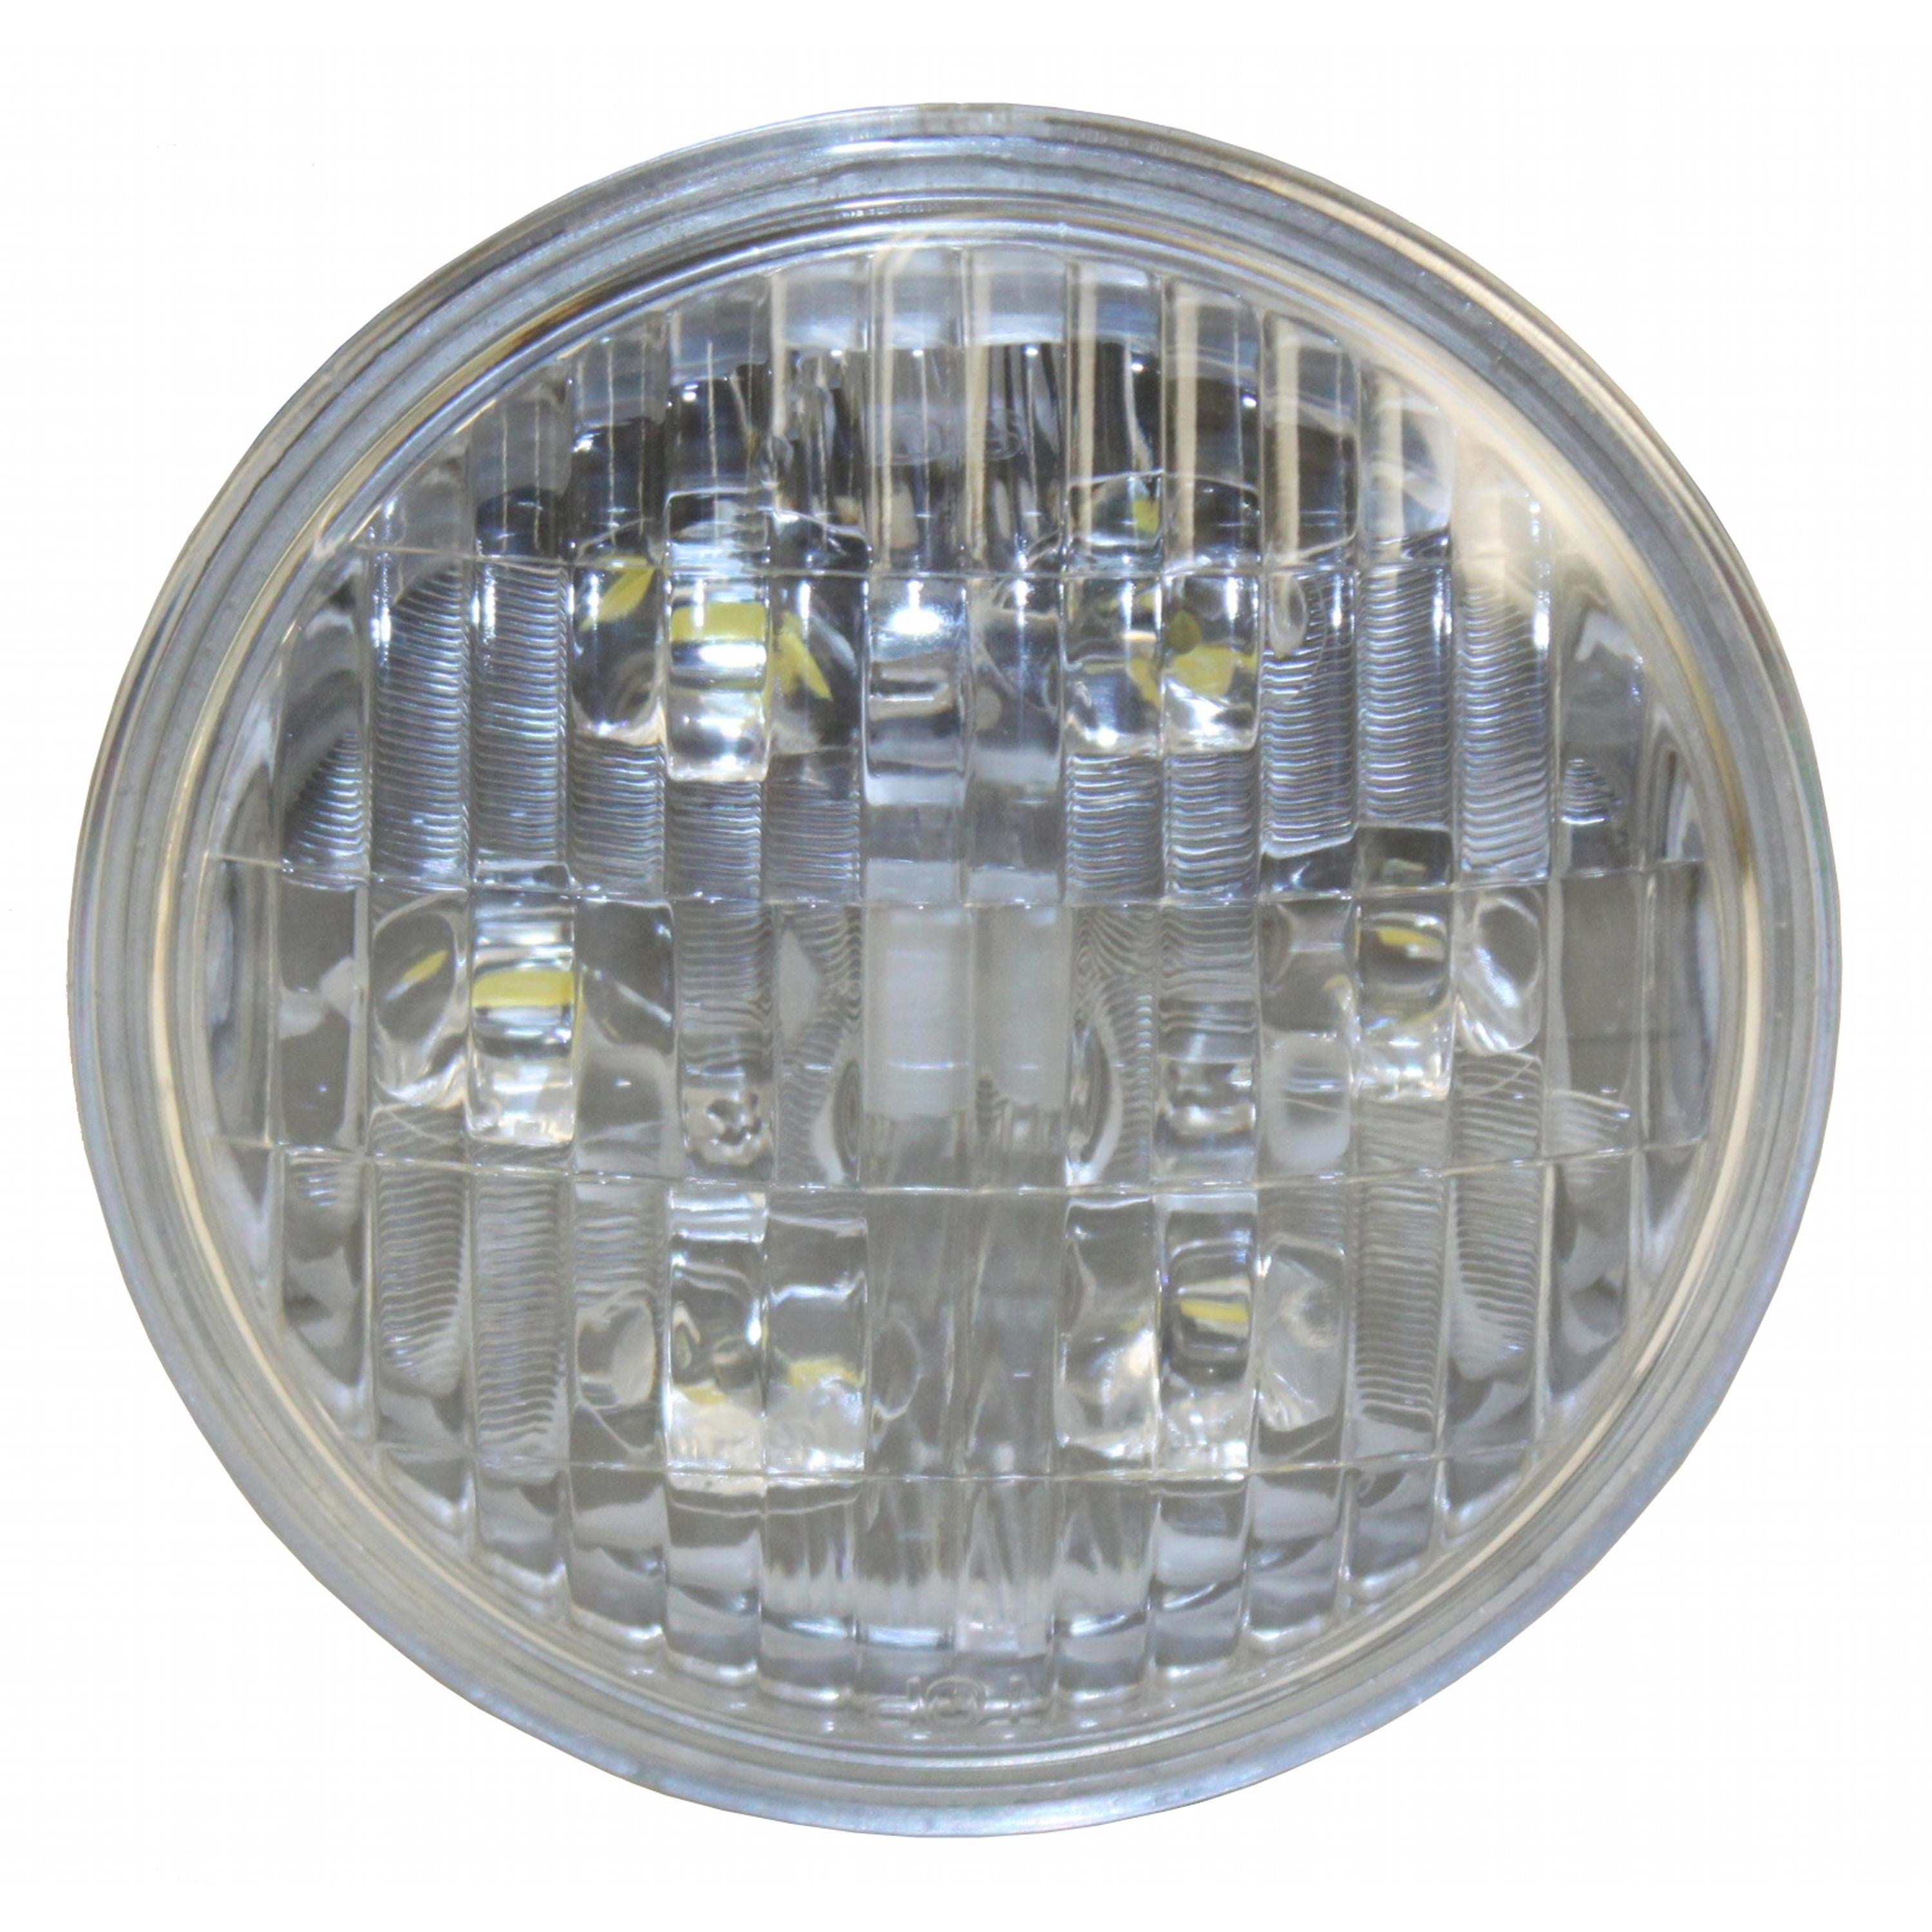 PAR36 LED Trapezoid Beam Bulb w/ Original Halogen Style Lens, 1260 Lumens